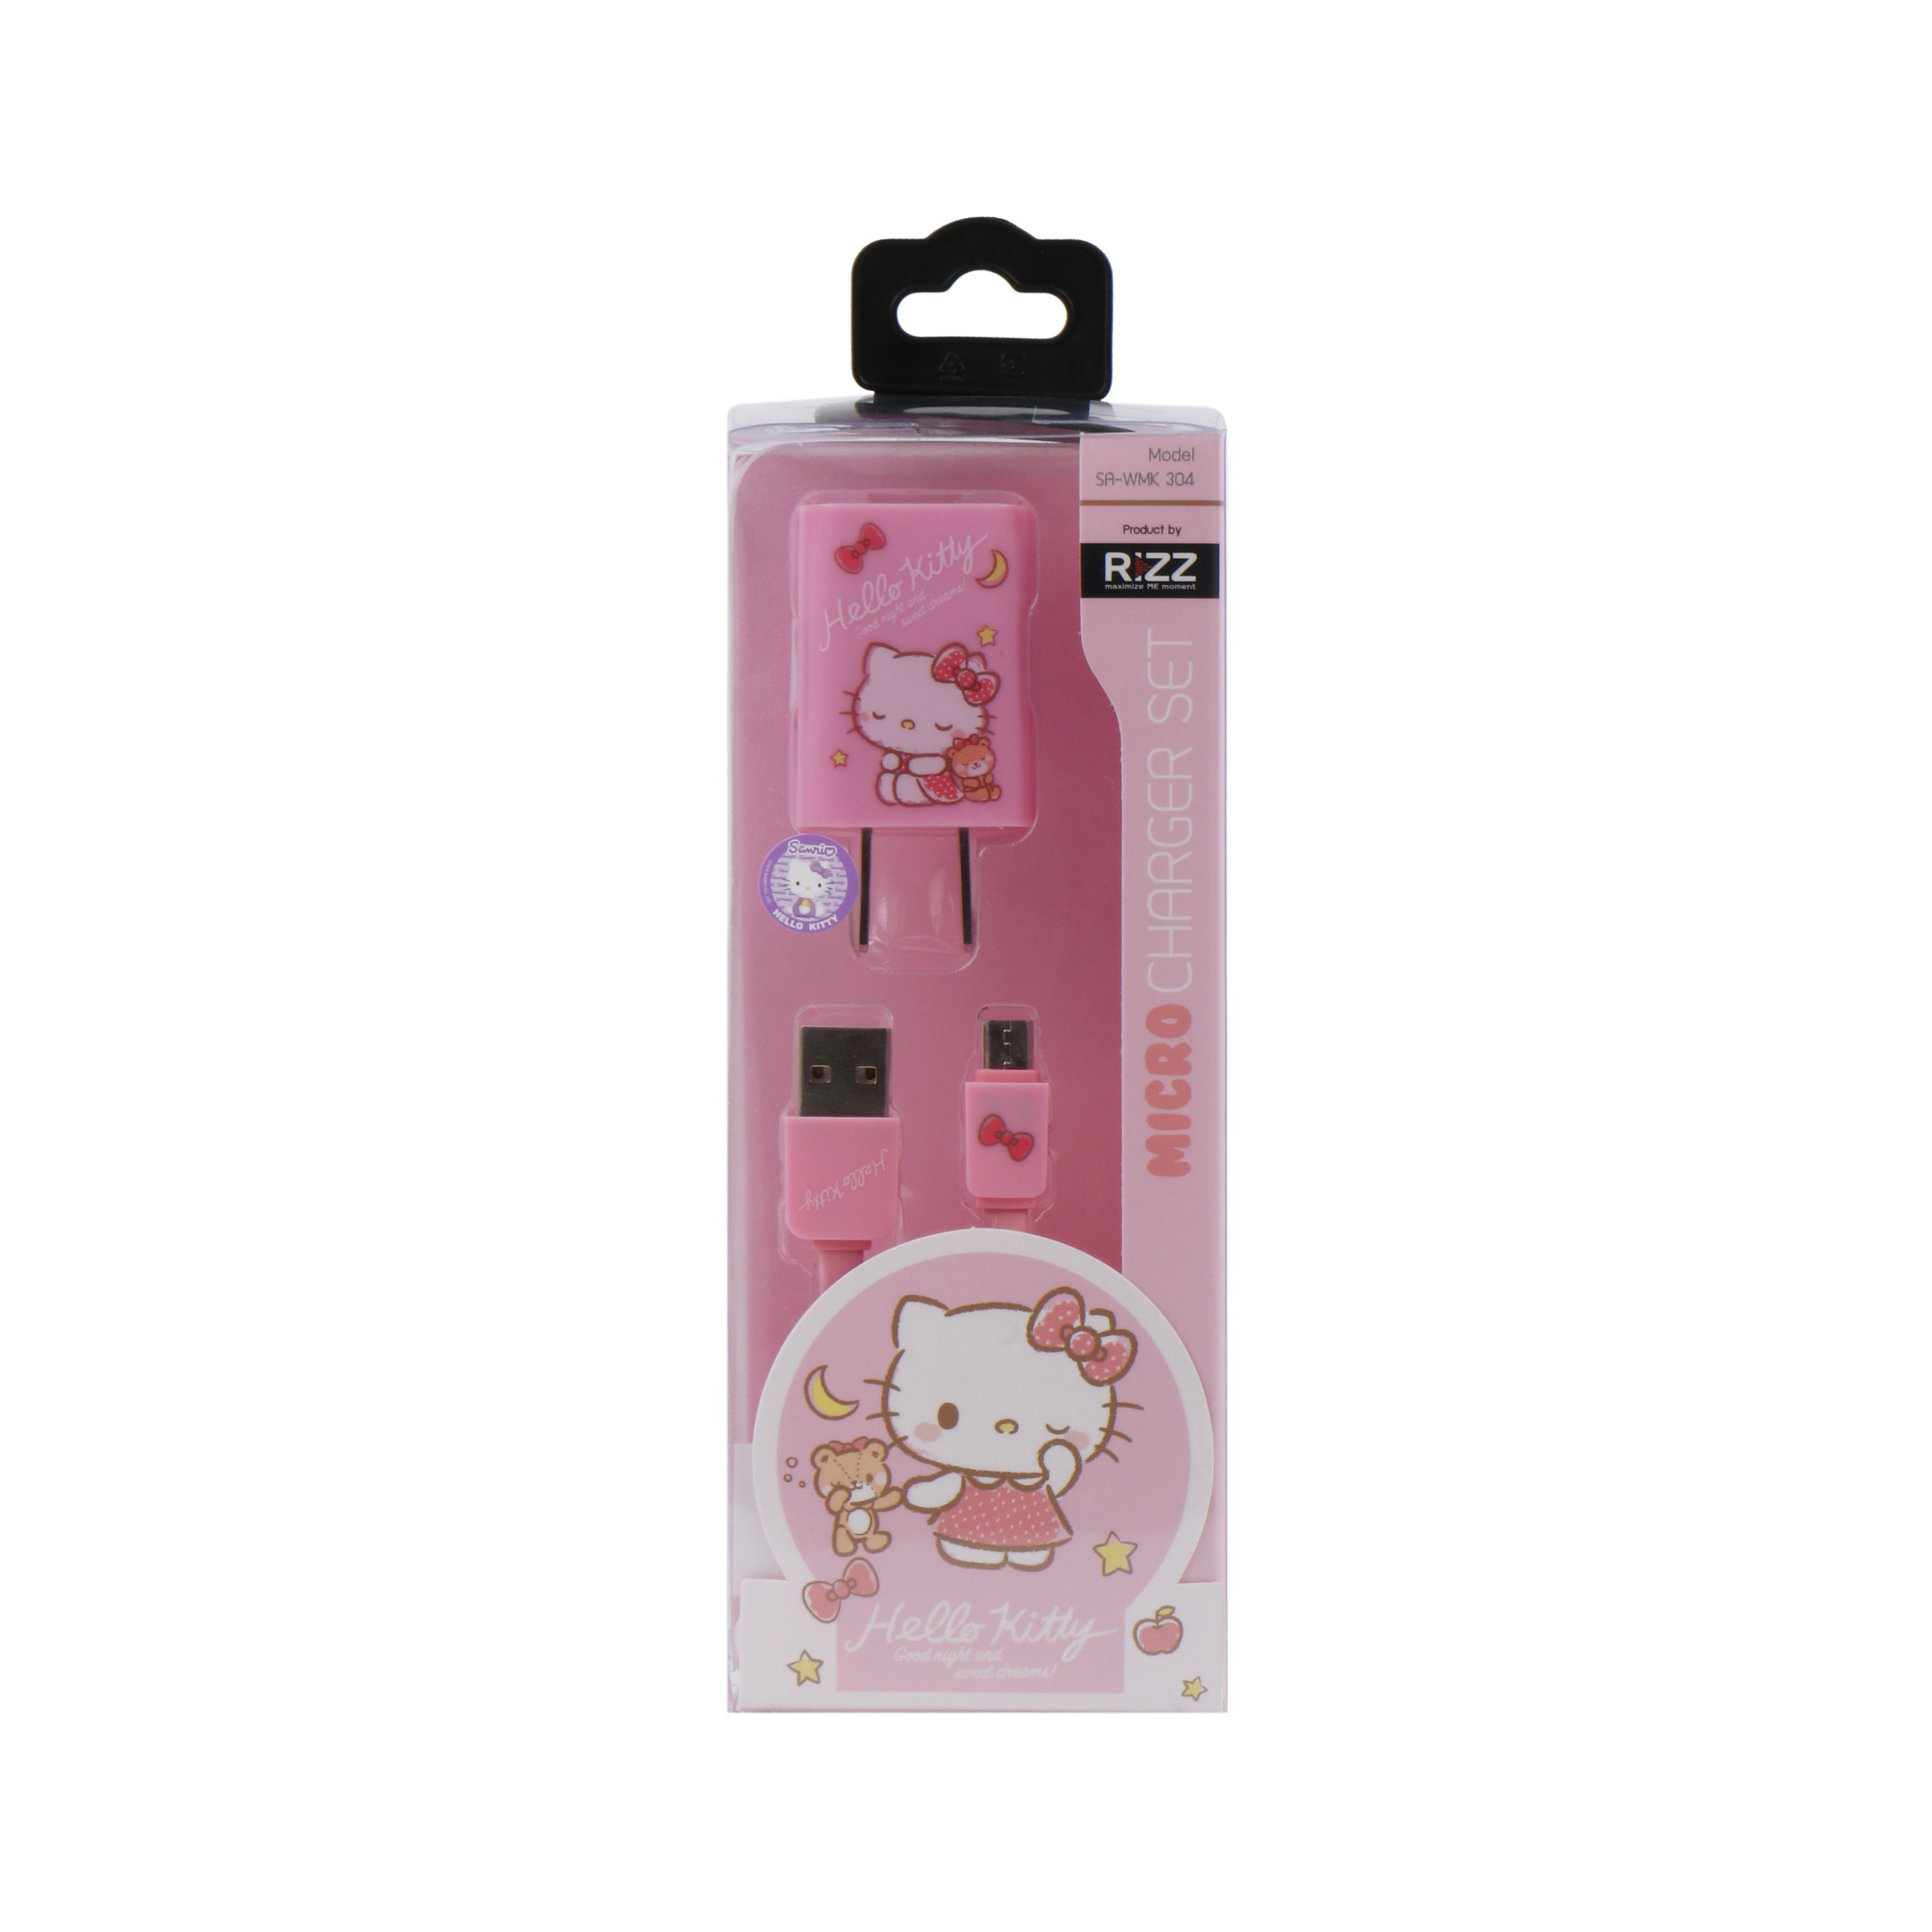 RIZZ(ริซ) Hello Kitty - Micro Charger Set ชุดชาร์จลิขสิทธิ์ลายคิตตี้ [ลิขสิทธิ์แท้ Sanrio]